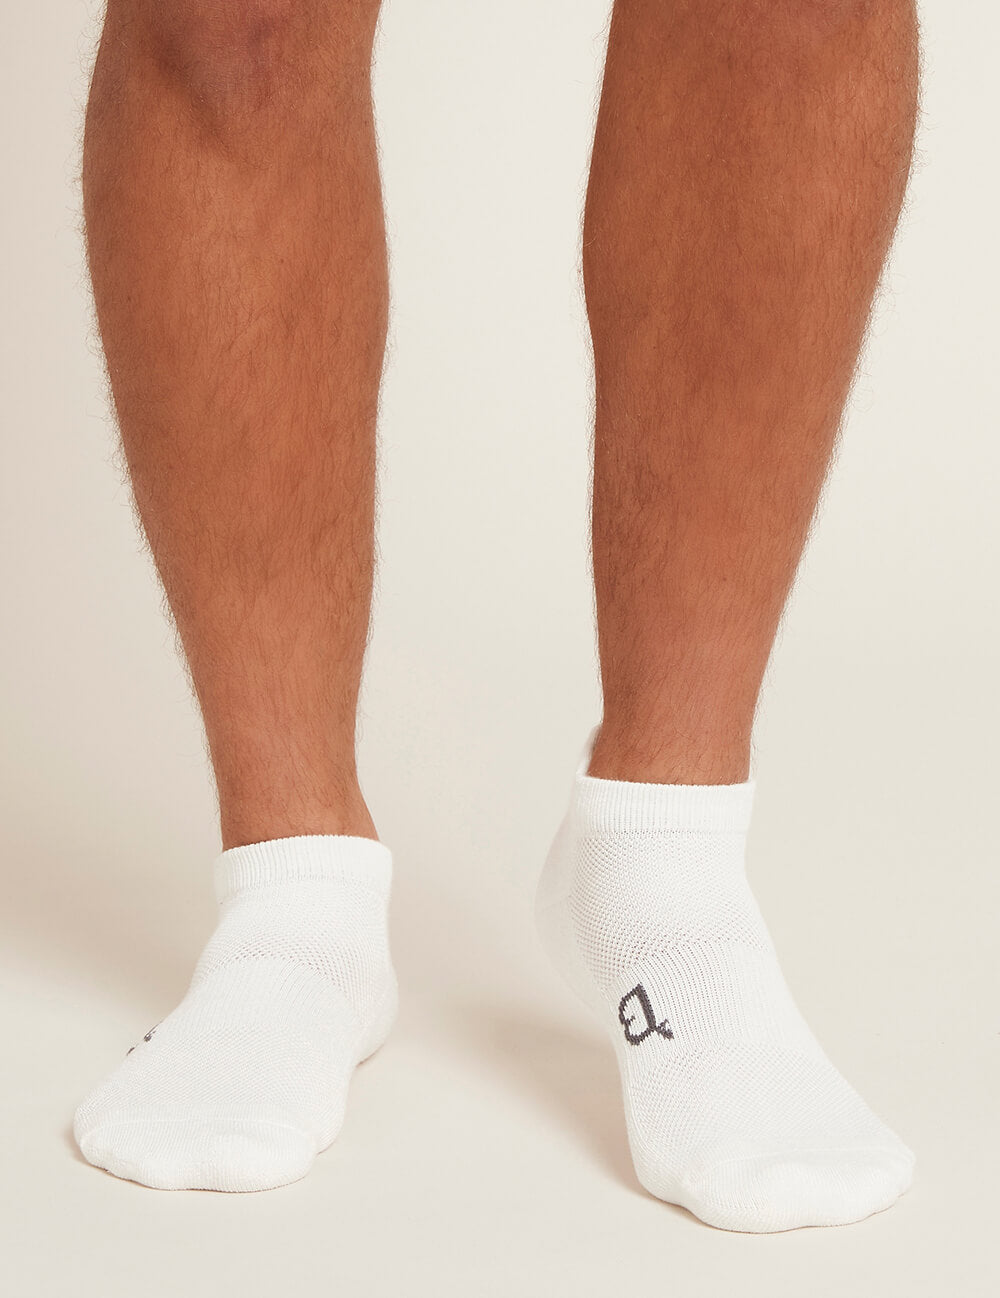 5-Pack Men's Active Sports Socks